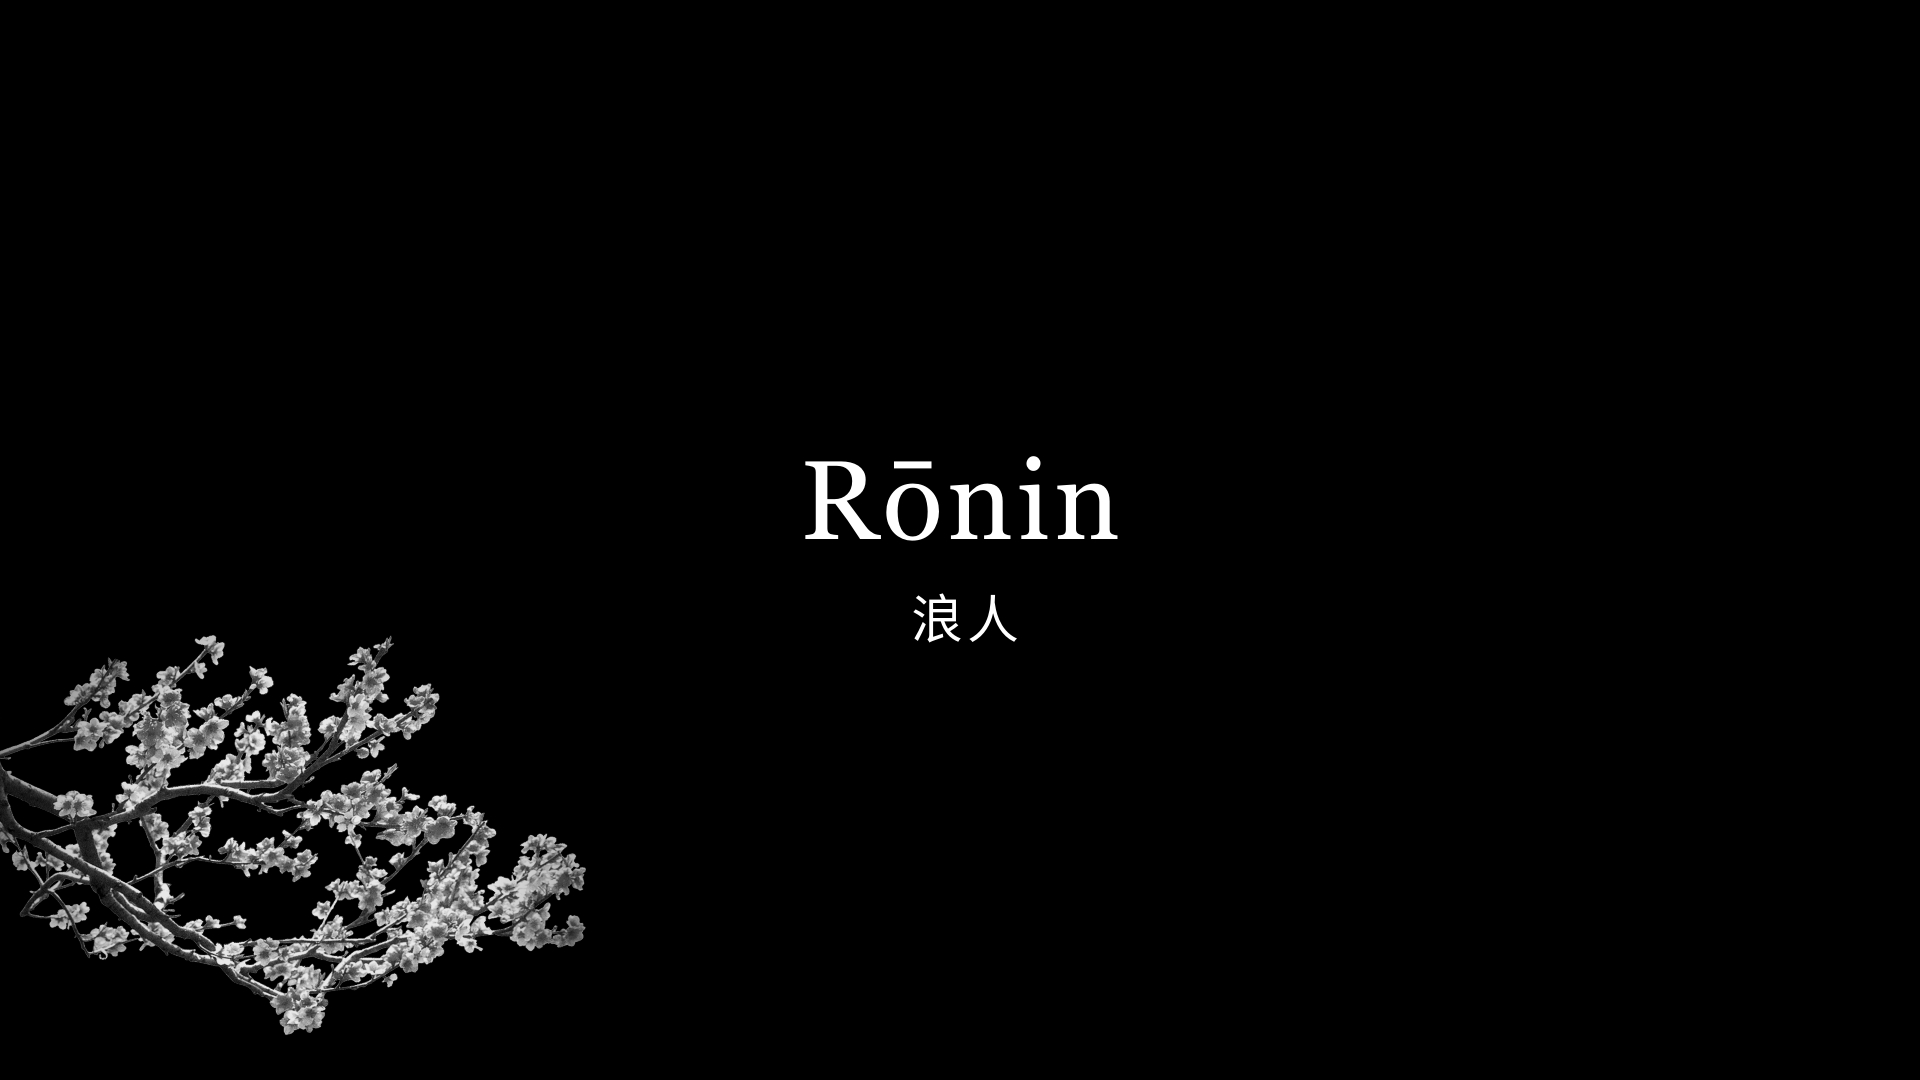 General 1920x1080 minimalism Japan cherry blossom black background monochrome Ronin